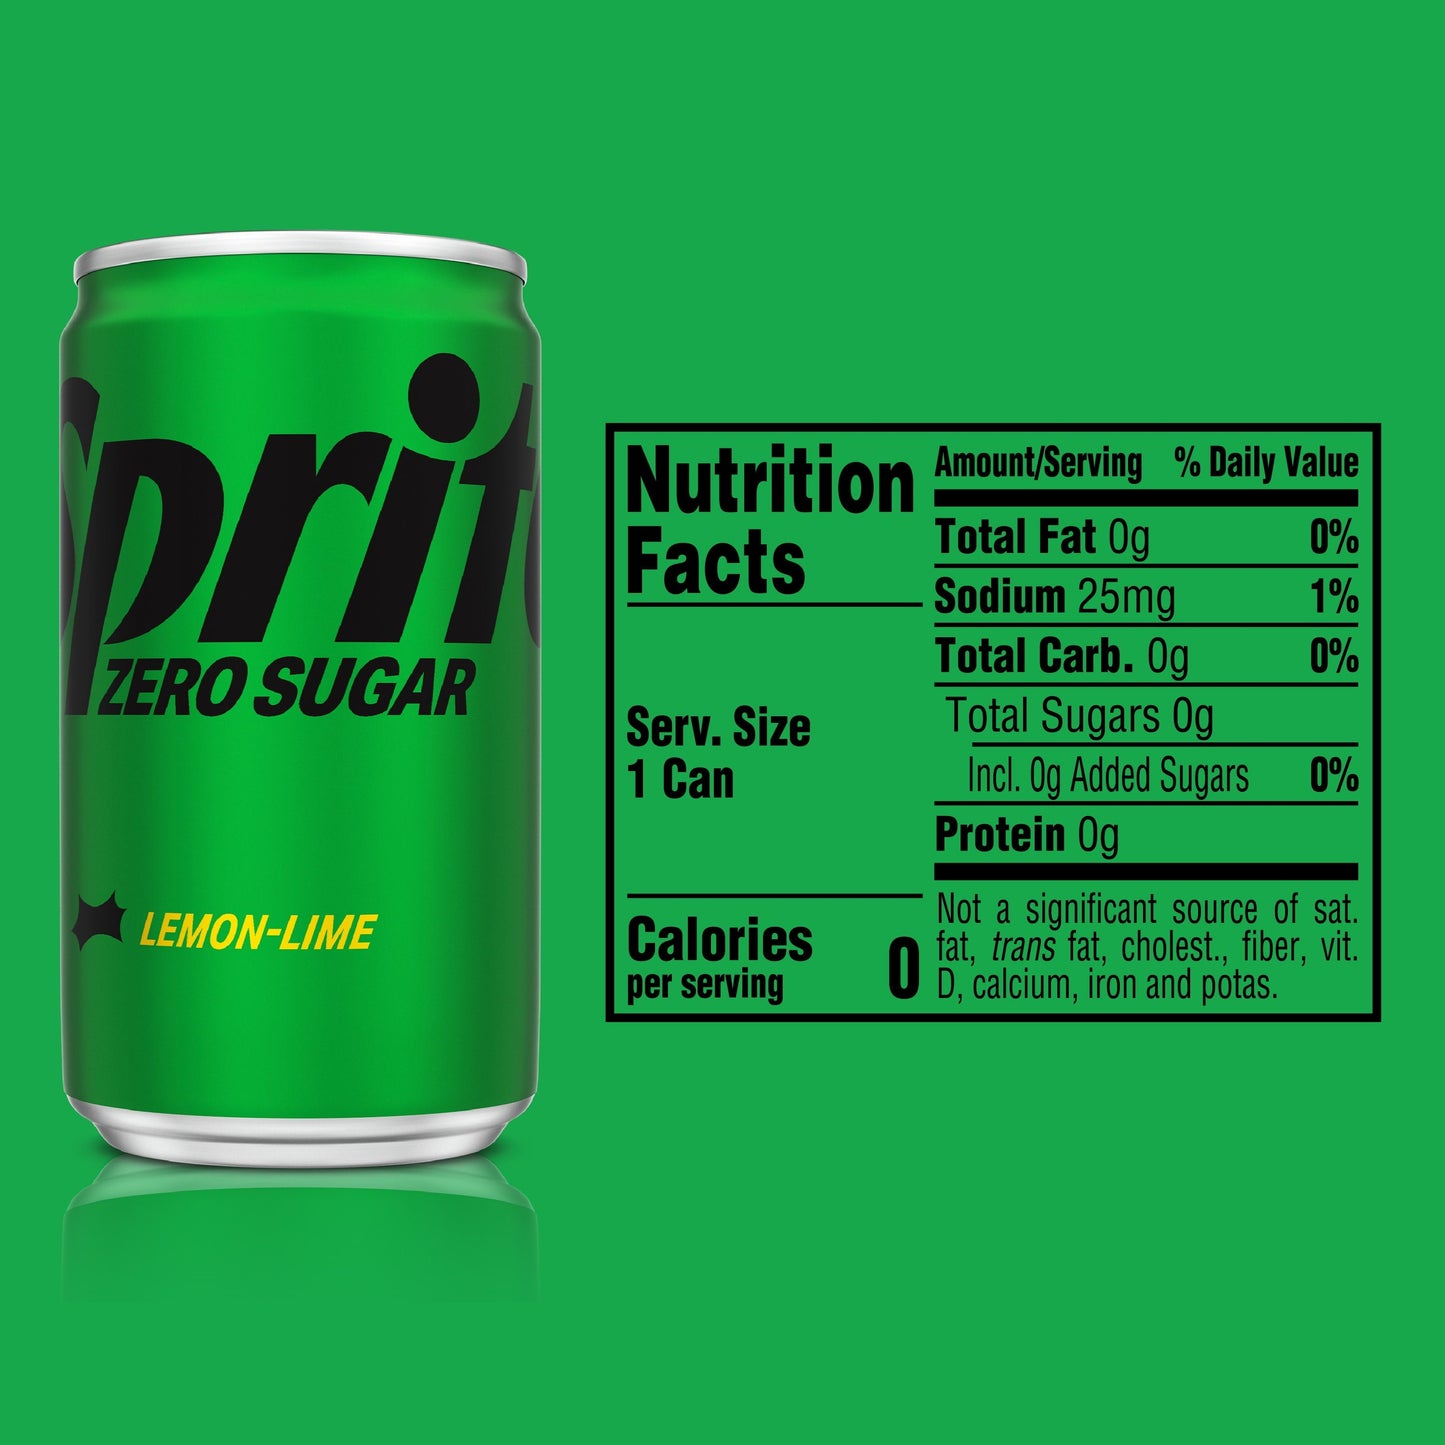 Sprite Zero Sugar Lemon Lime Mini Soda Pop Soft Drink, 7.5 fl oz, 6 Pack Cans